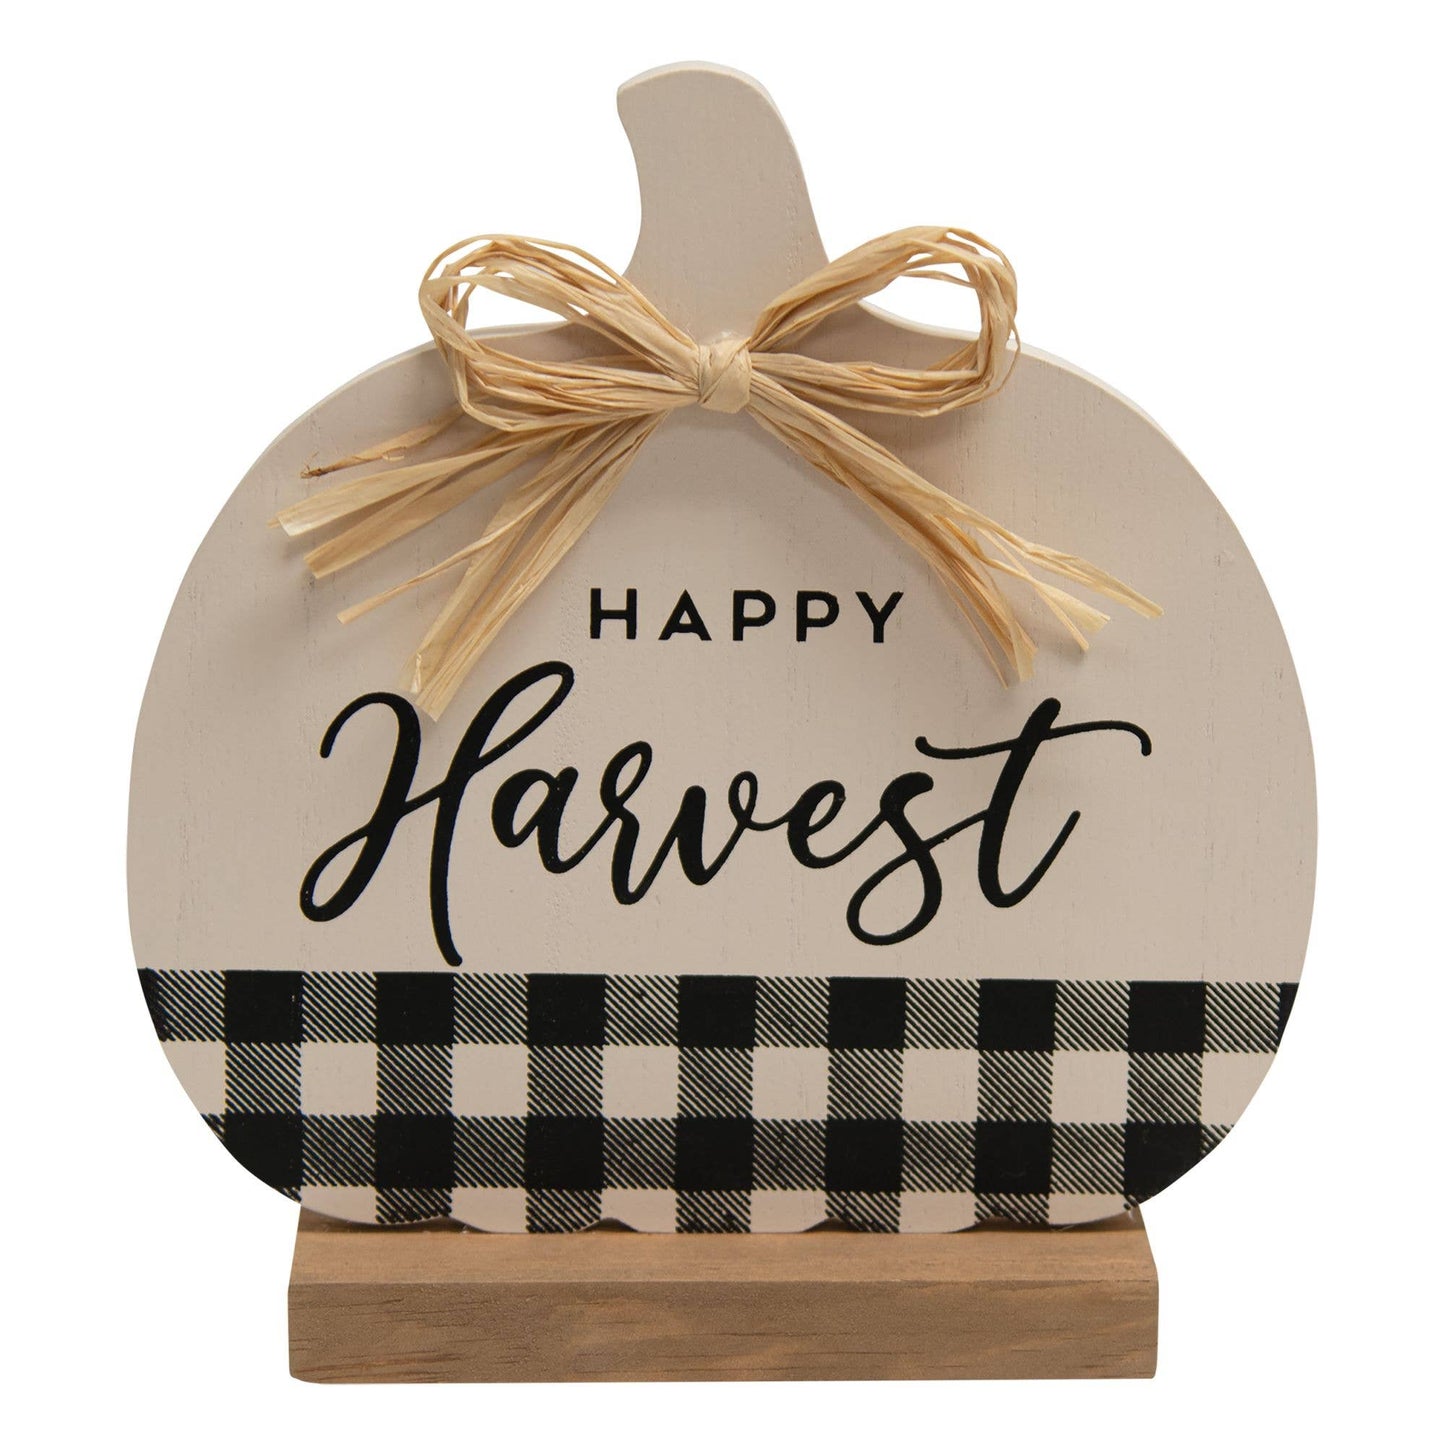 Happy Harvest Buffalo Check & White Pumpkin